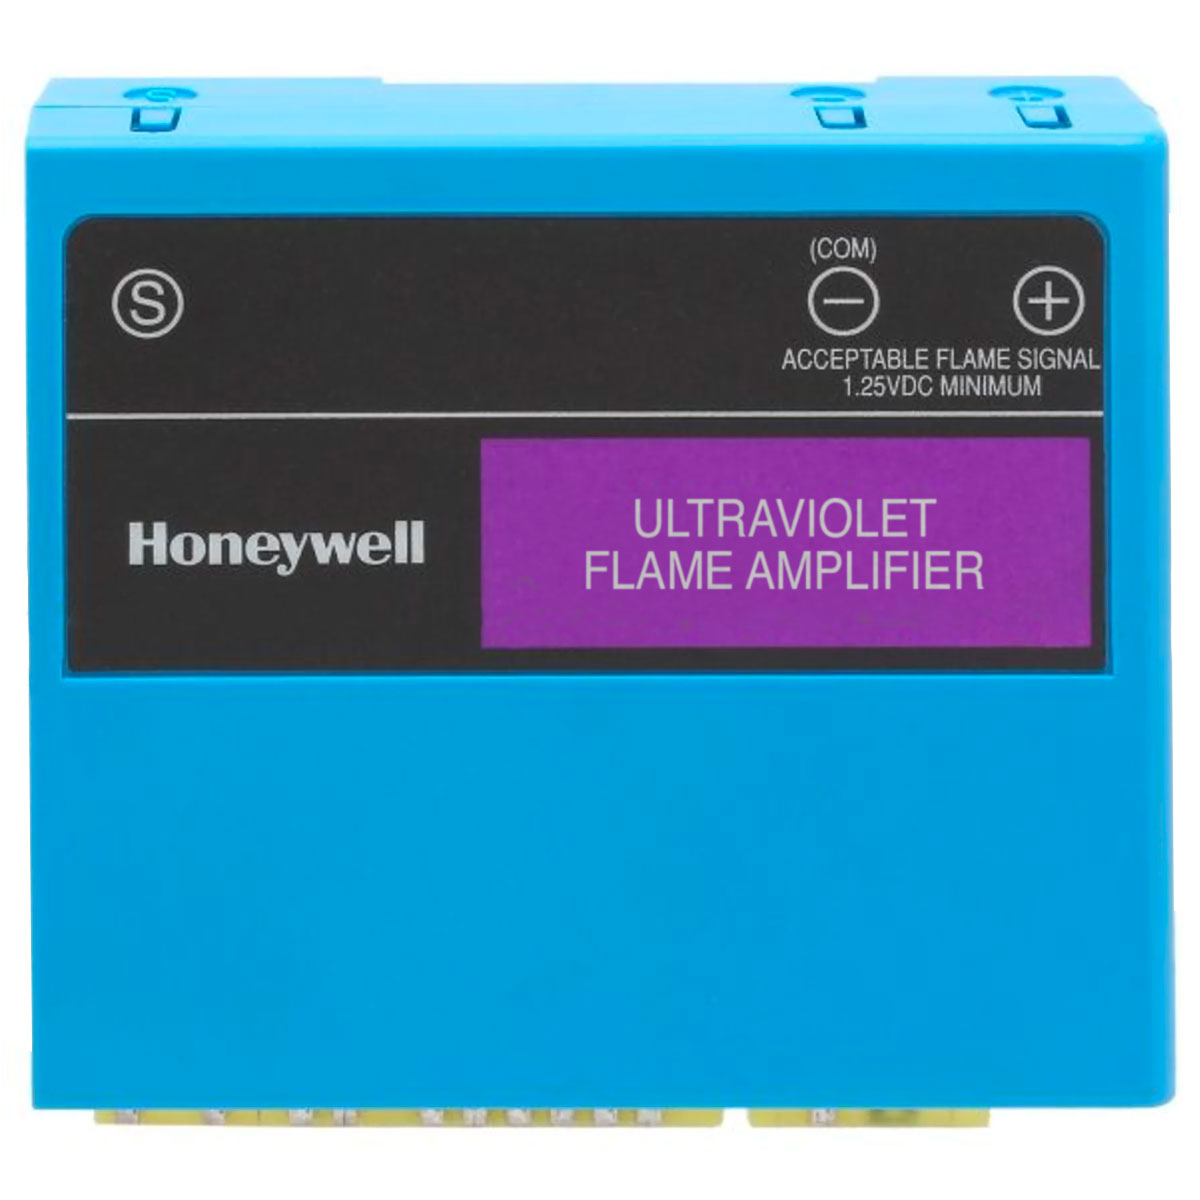 Flame Amplifier, UV, FFRT: 0.8,1.0sec